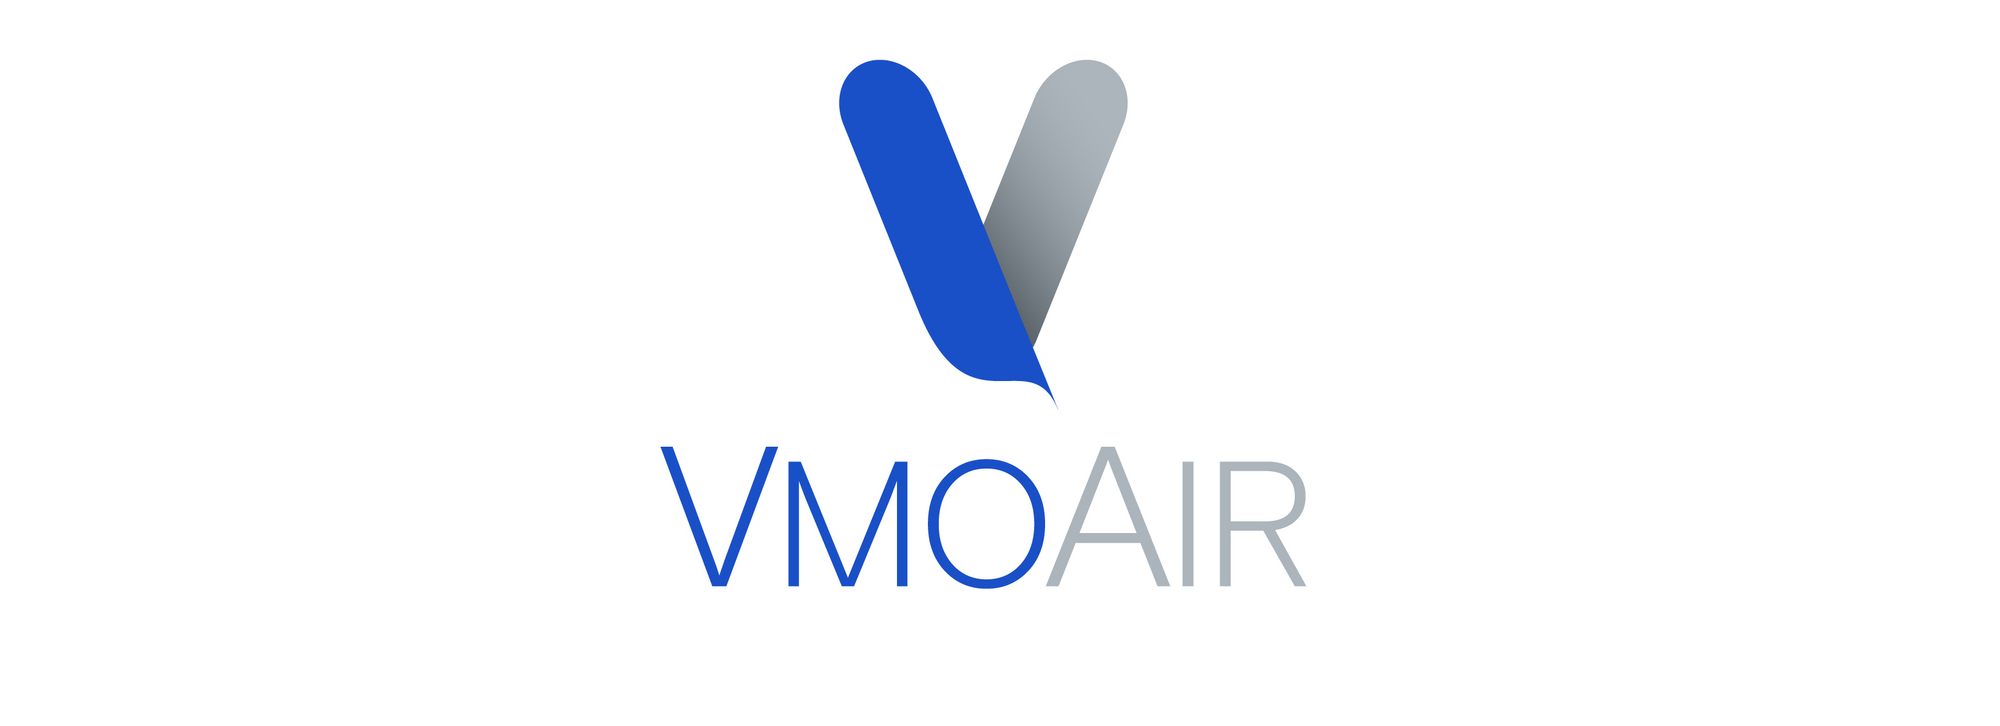 Vmo Aircraft Leasing Appoints Ardy Ghanbar as CFO